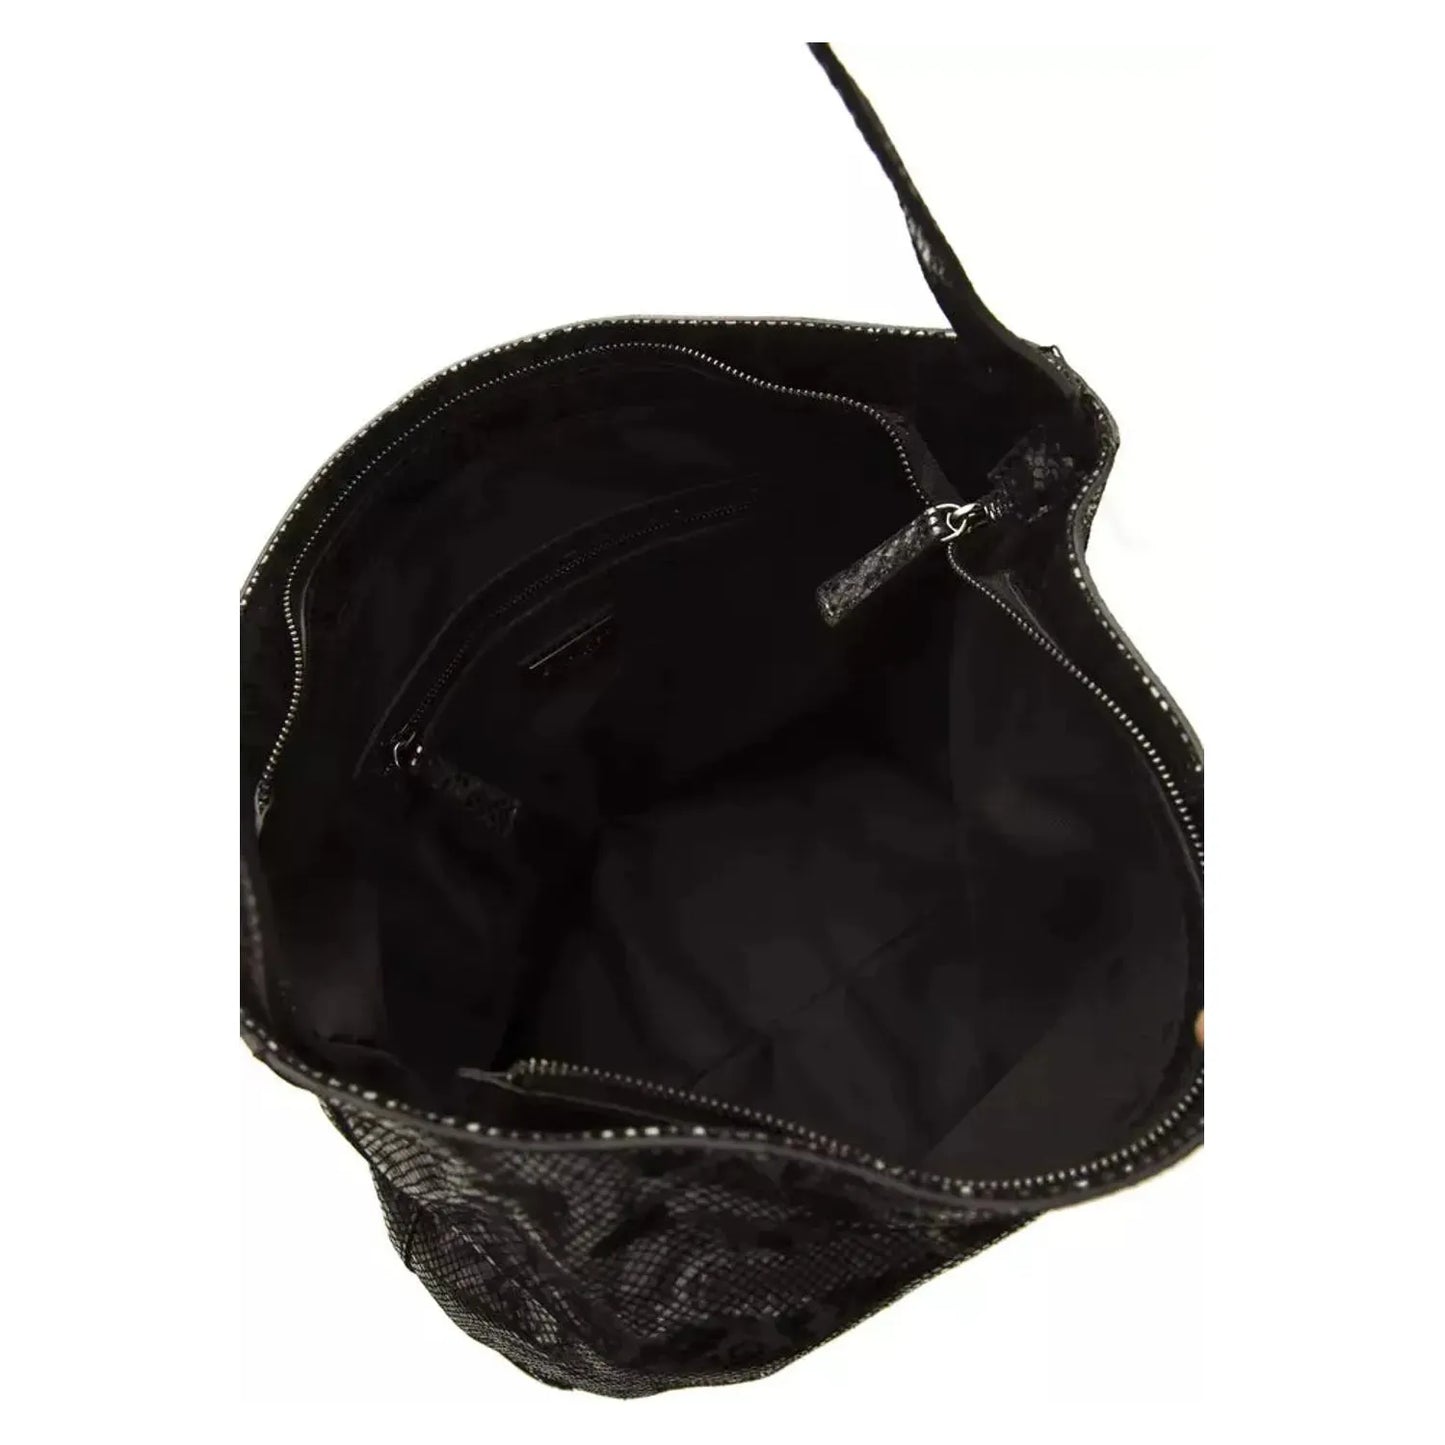 Pompei Donatella Chic Python Print Leather Shoulder Bag gray-leather-shoulder-bag-4 stock_product_image_5787_1110727532-22-2781fabb-a20.webp